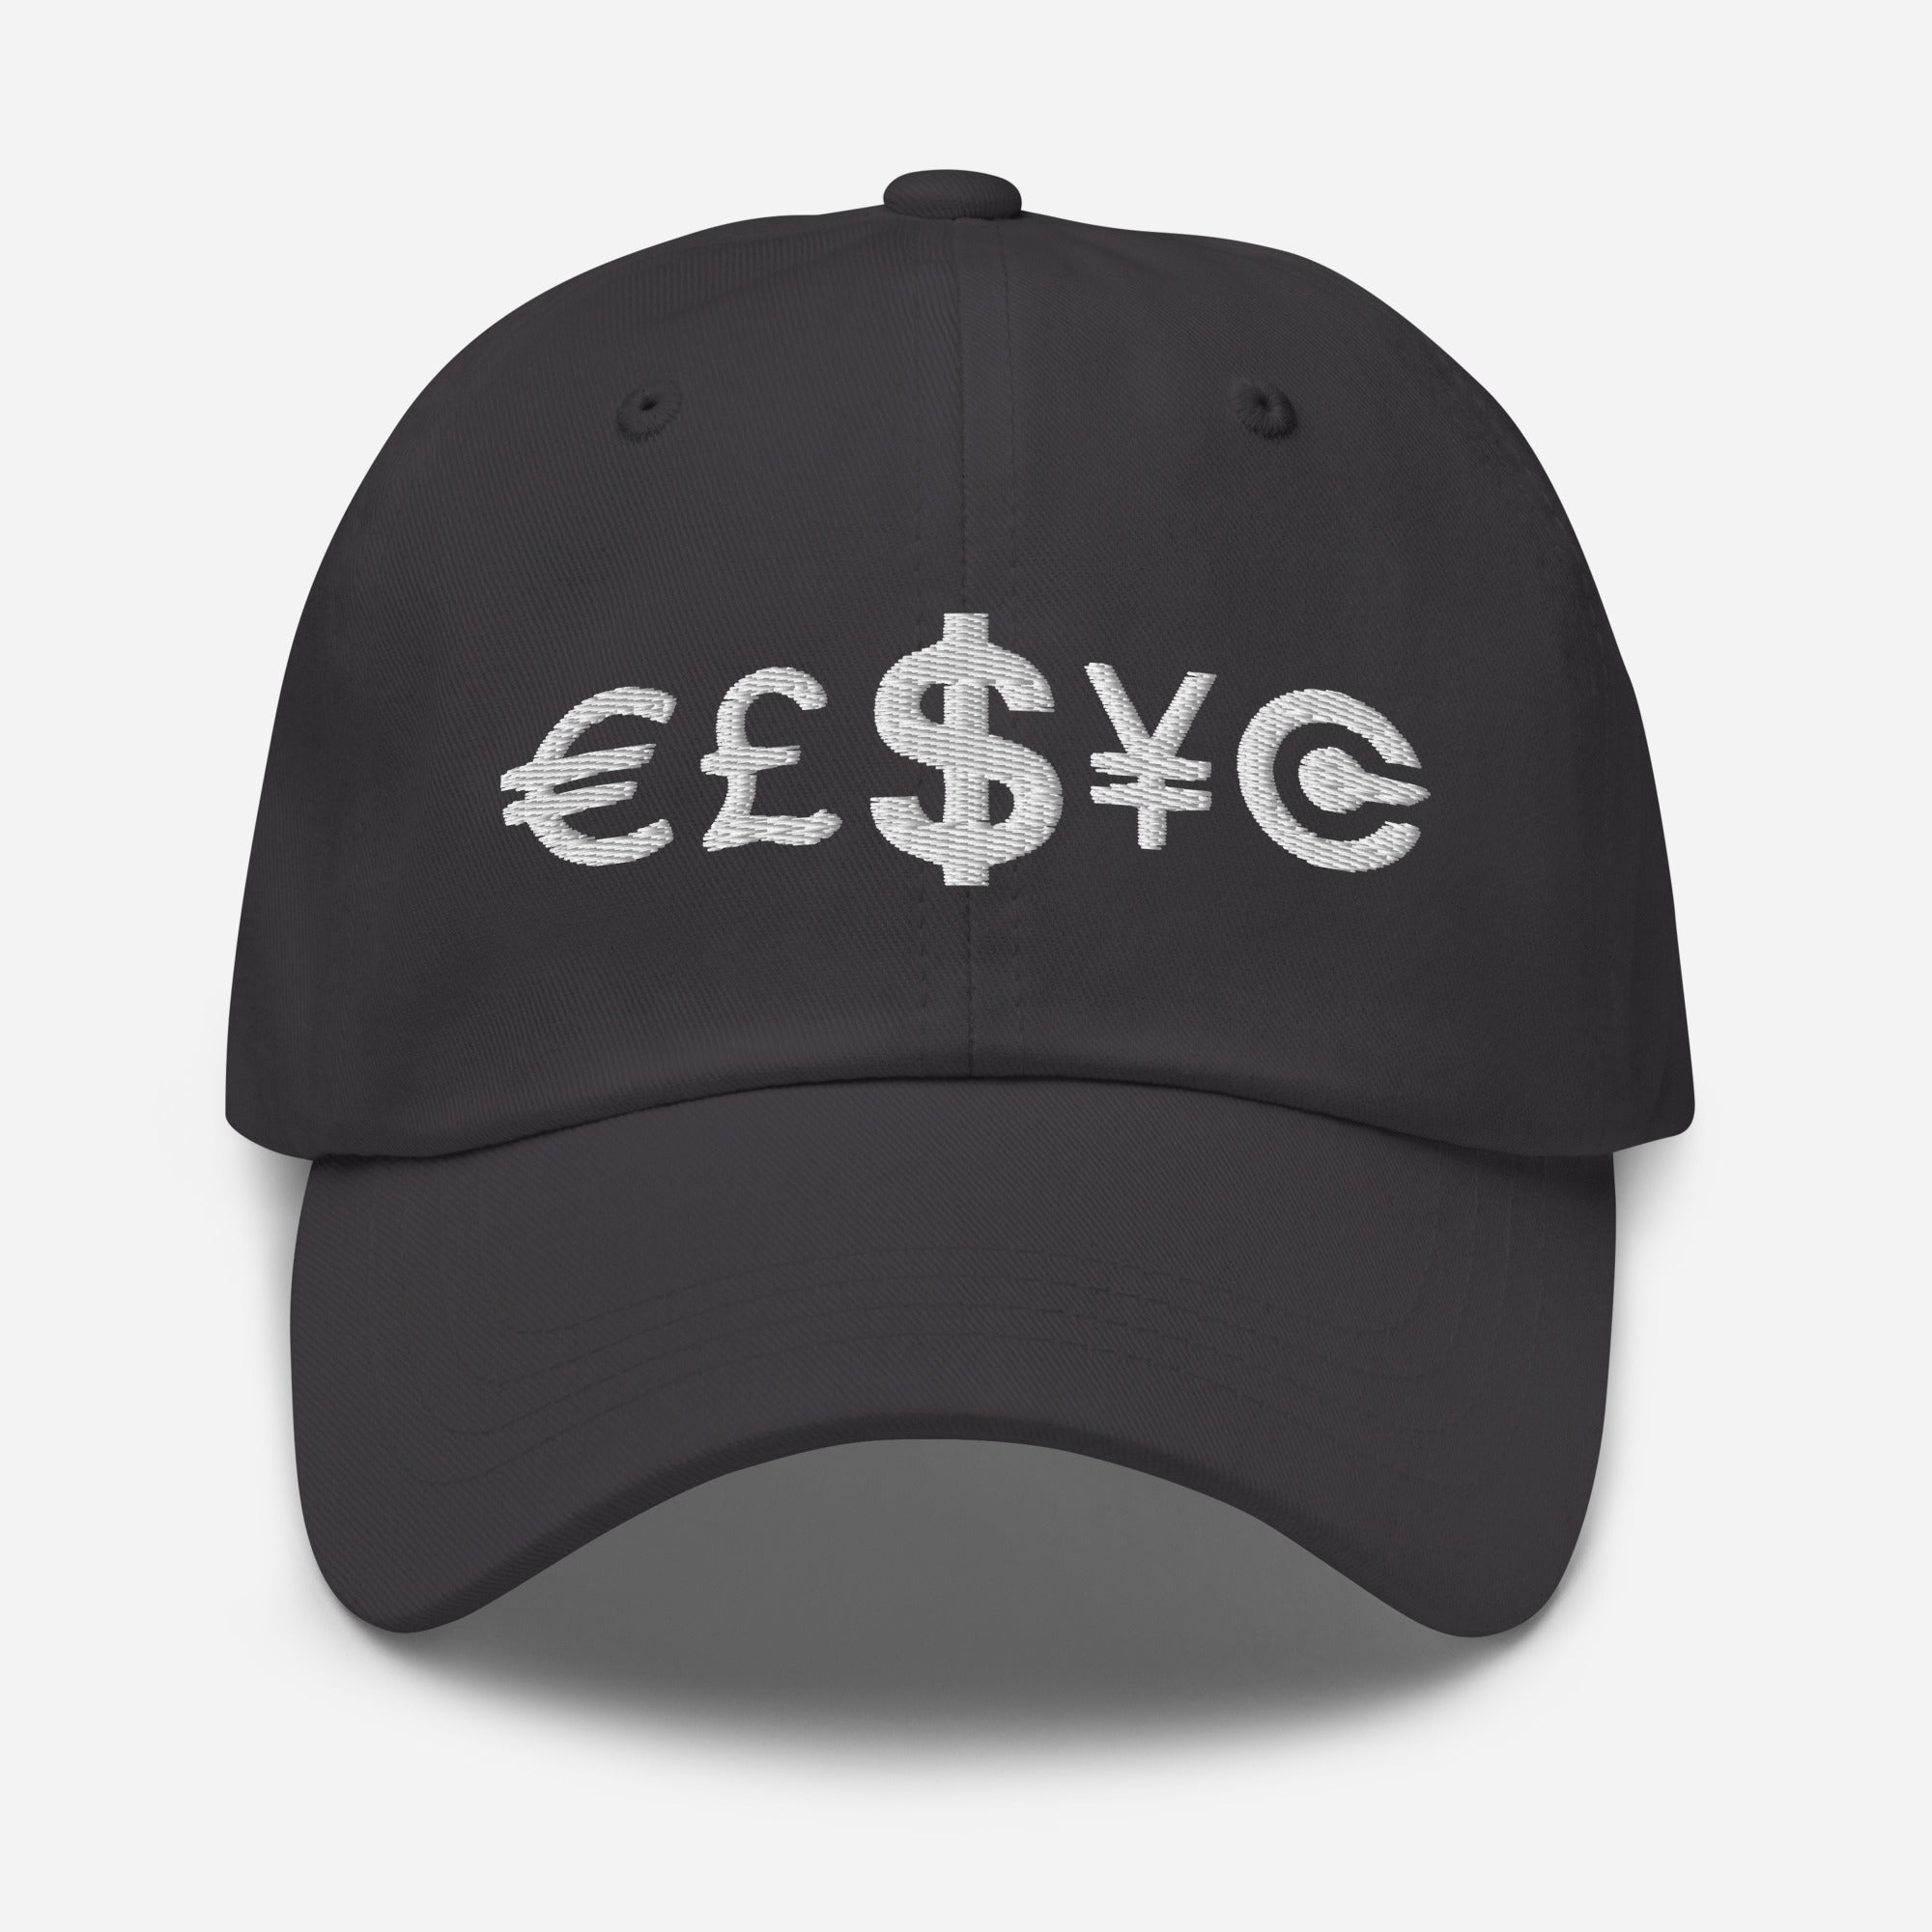 Money is Power Dollar Euro Pound Yen Crypto Embroidered Baseball Cap Dad hat